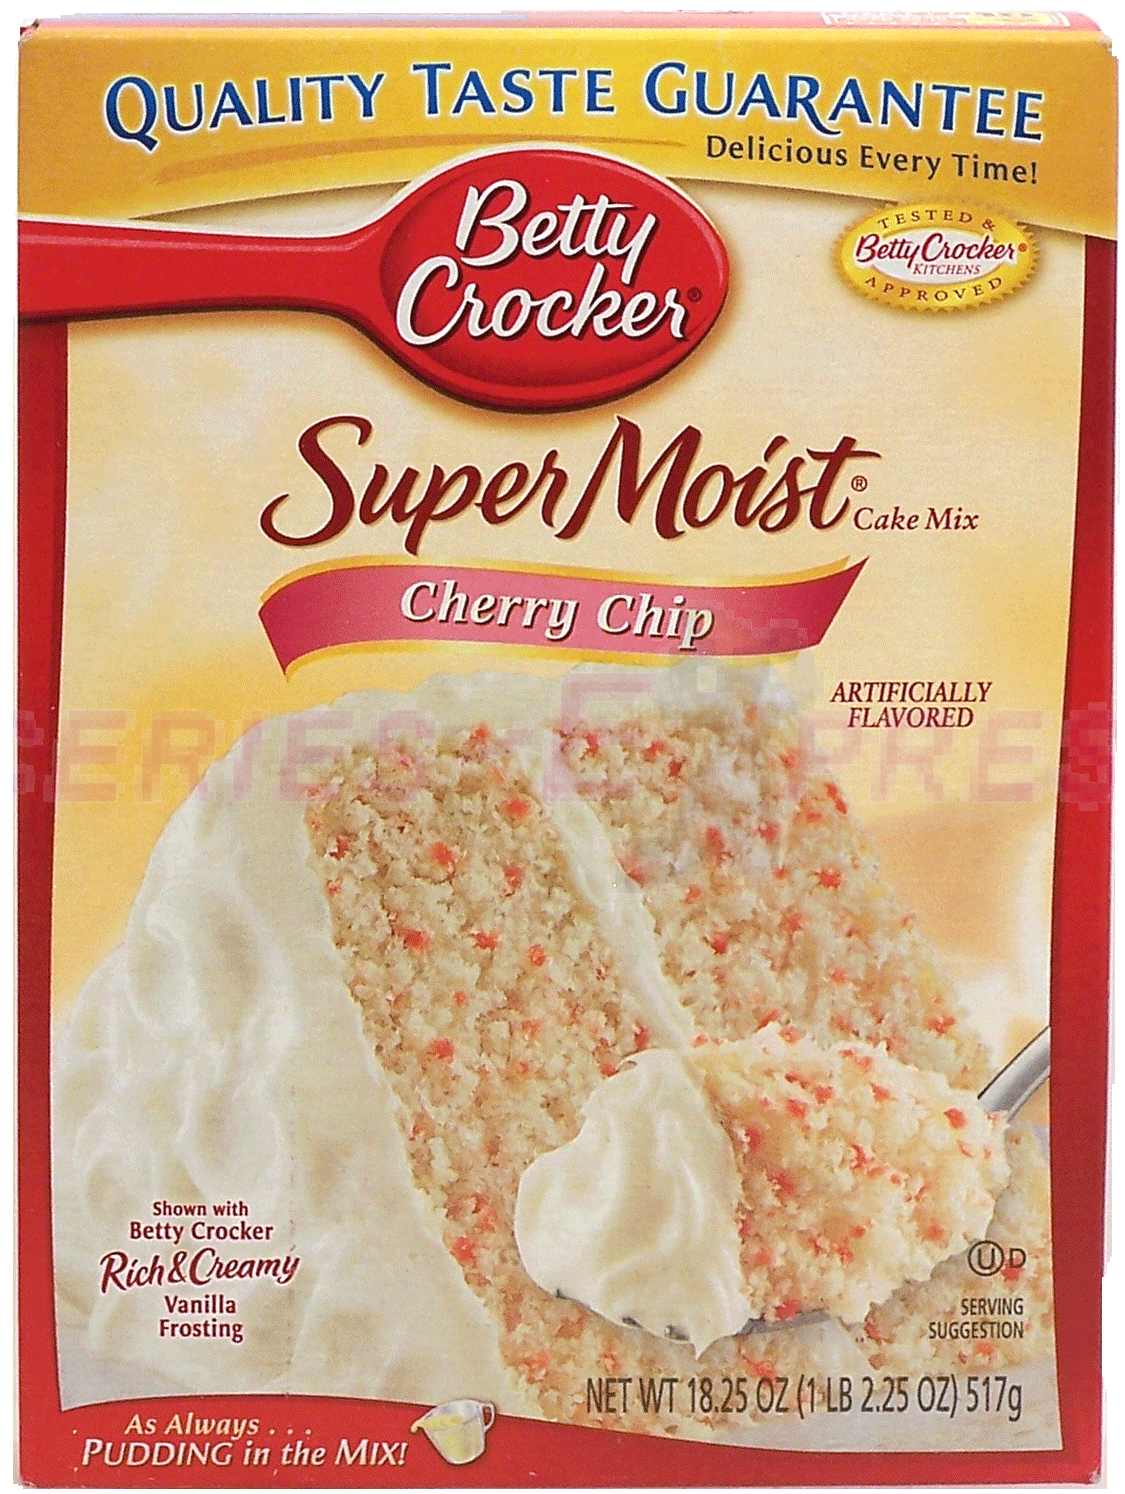 Betty Crocker Super Moist cherry chip cake mix Full-Size Picture